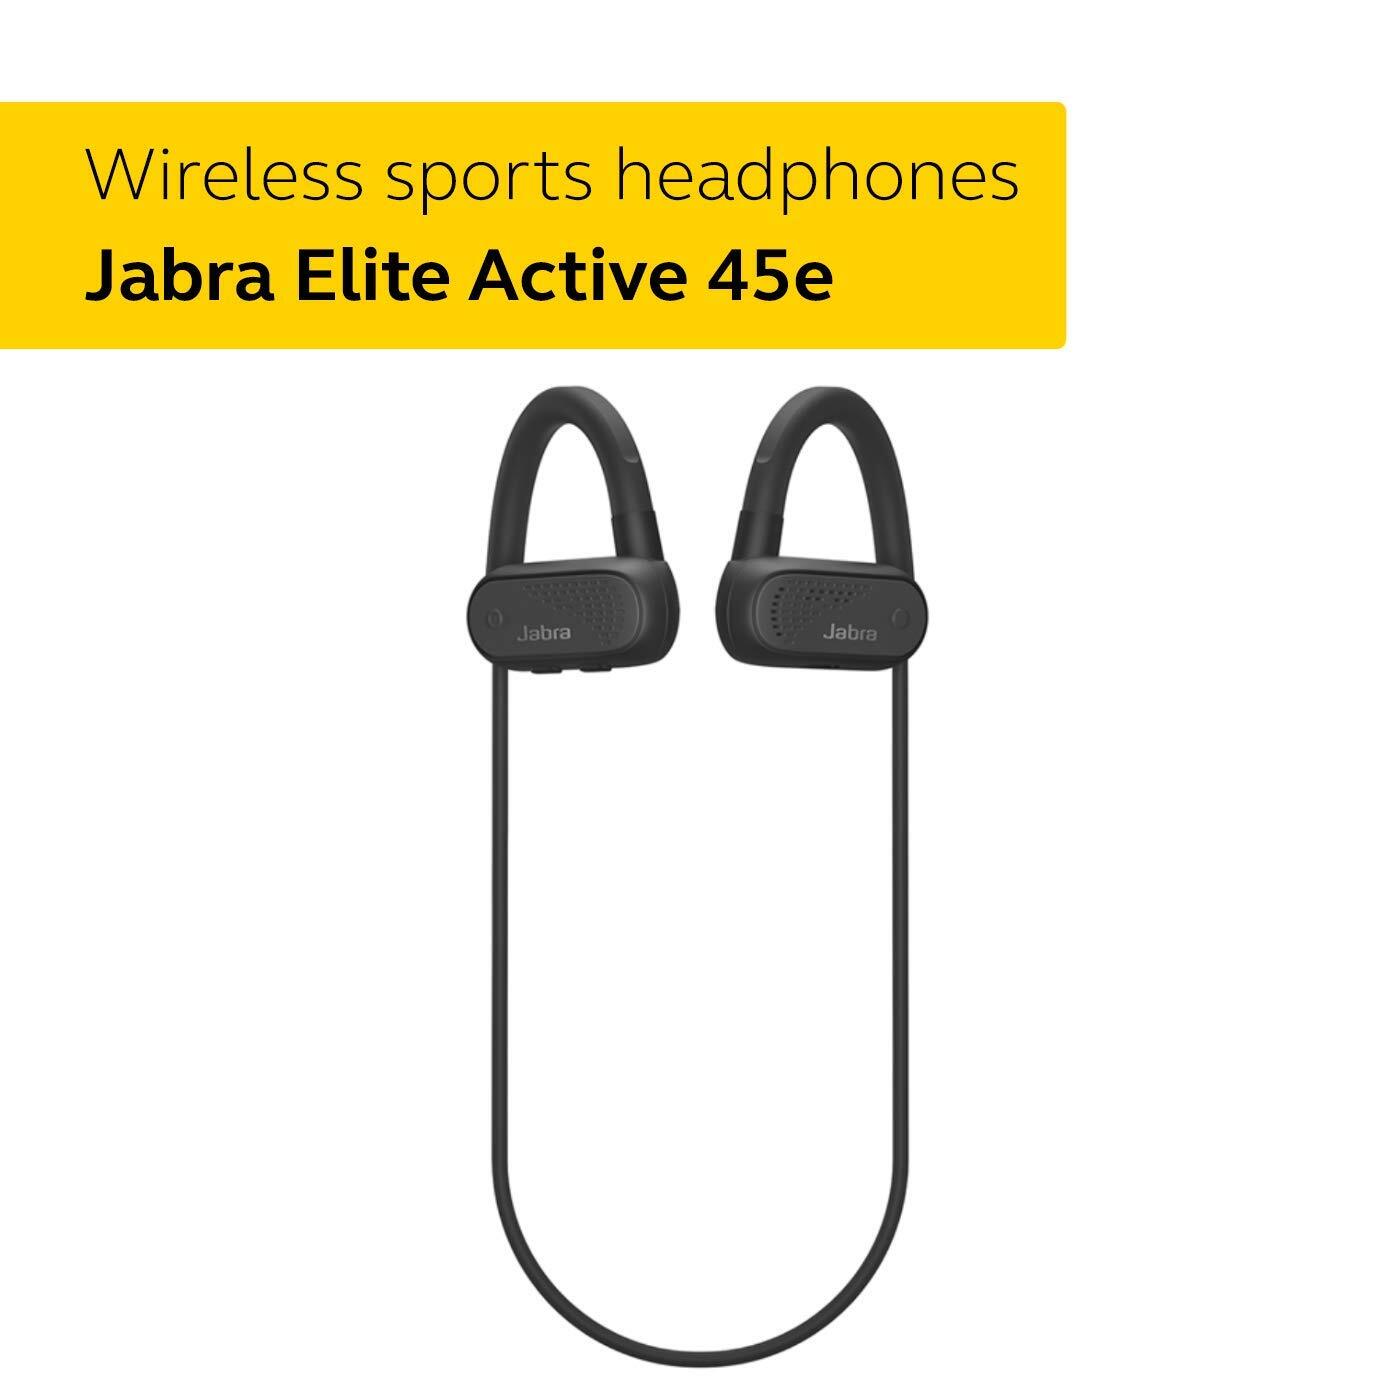 Jabra Elite Active 45e, Wireless Sports Earbuds, Waterproof and Alexa Enabled, Earhooks and Earwings - Black-M000000000431 www.mysocially.com